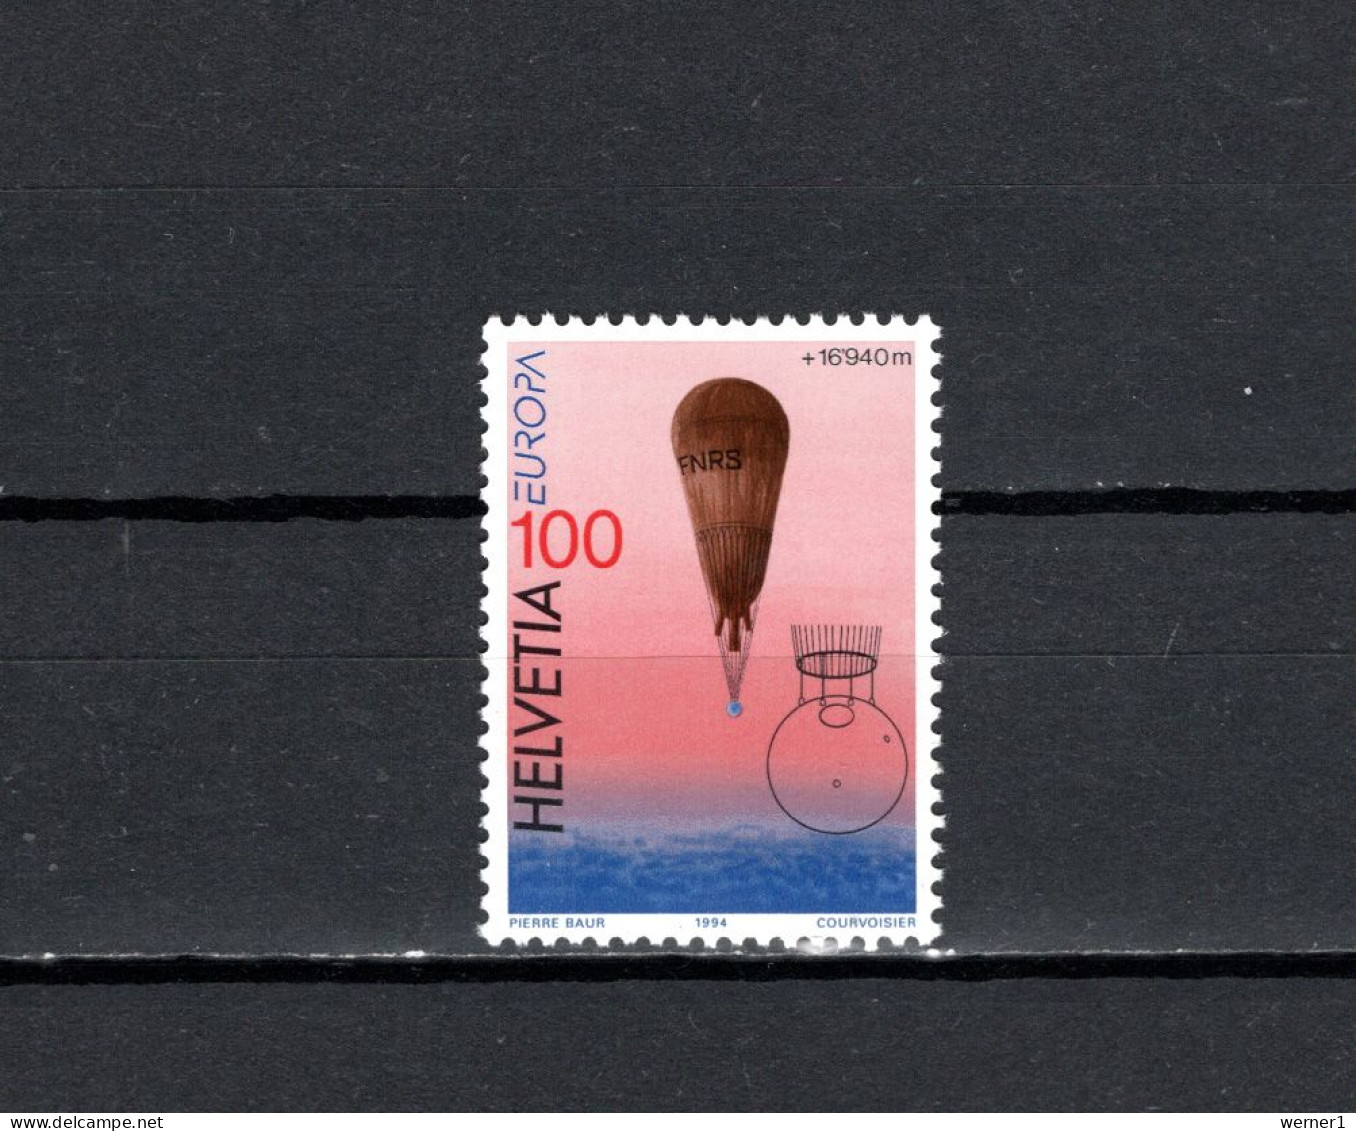 Switzerland 1994 Space, FNRS Stratosphere Balloon Stamp MNH - Europa